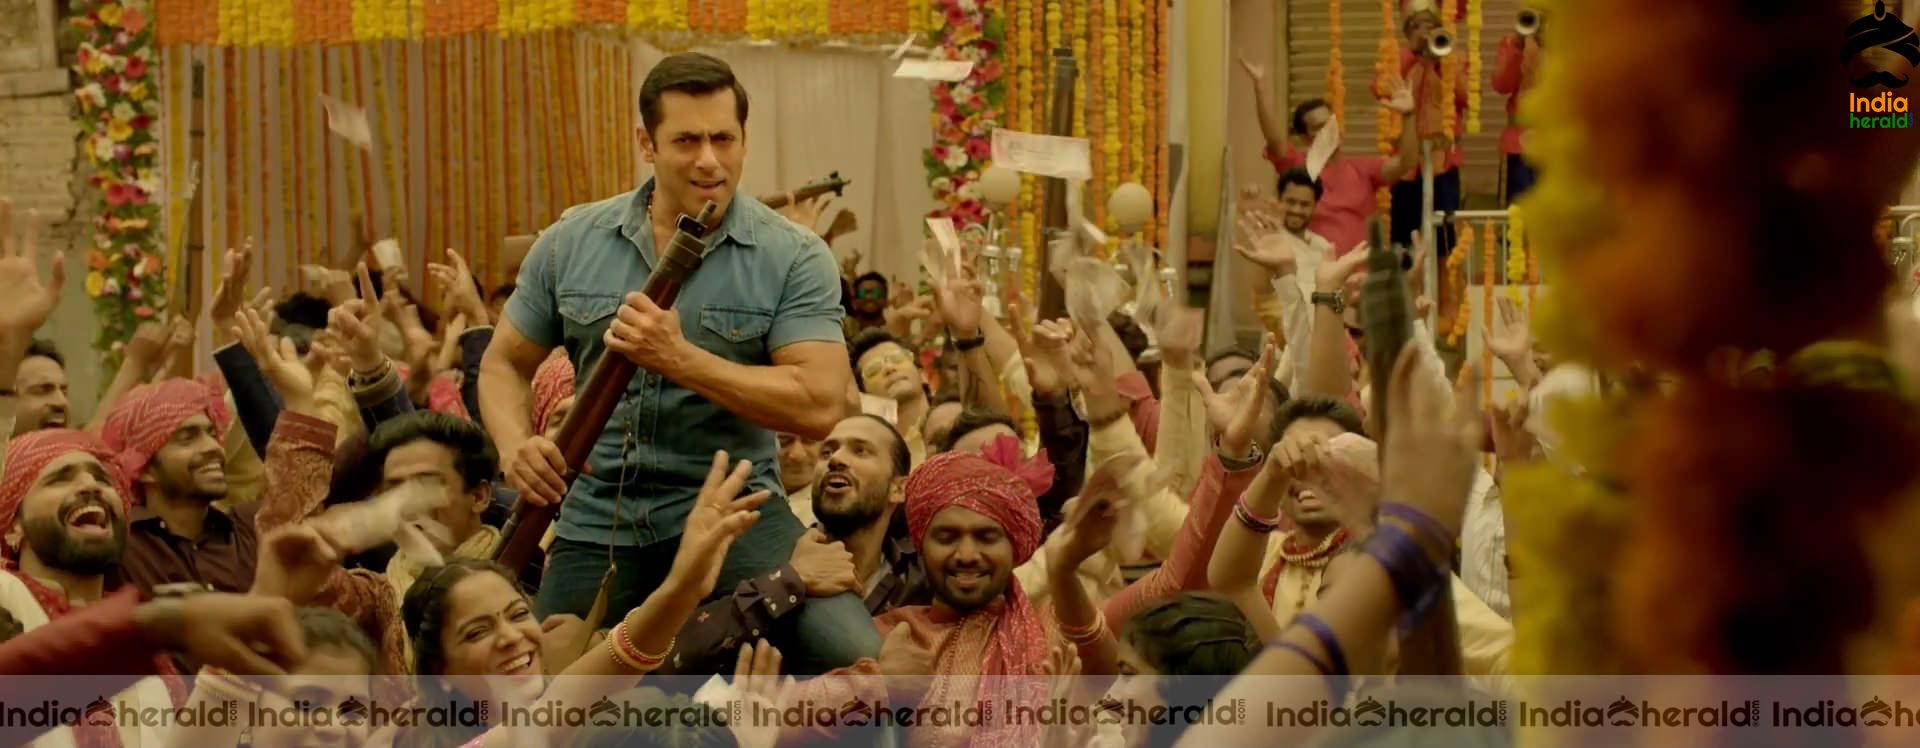 Salman Khan in Dabaang 3 Trailer HD Stills Set 2